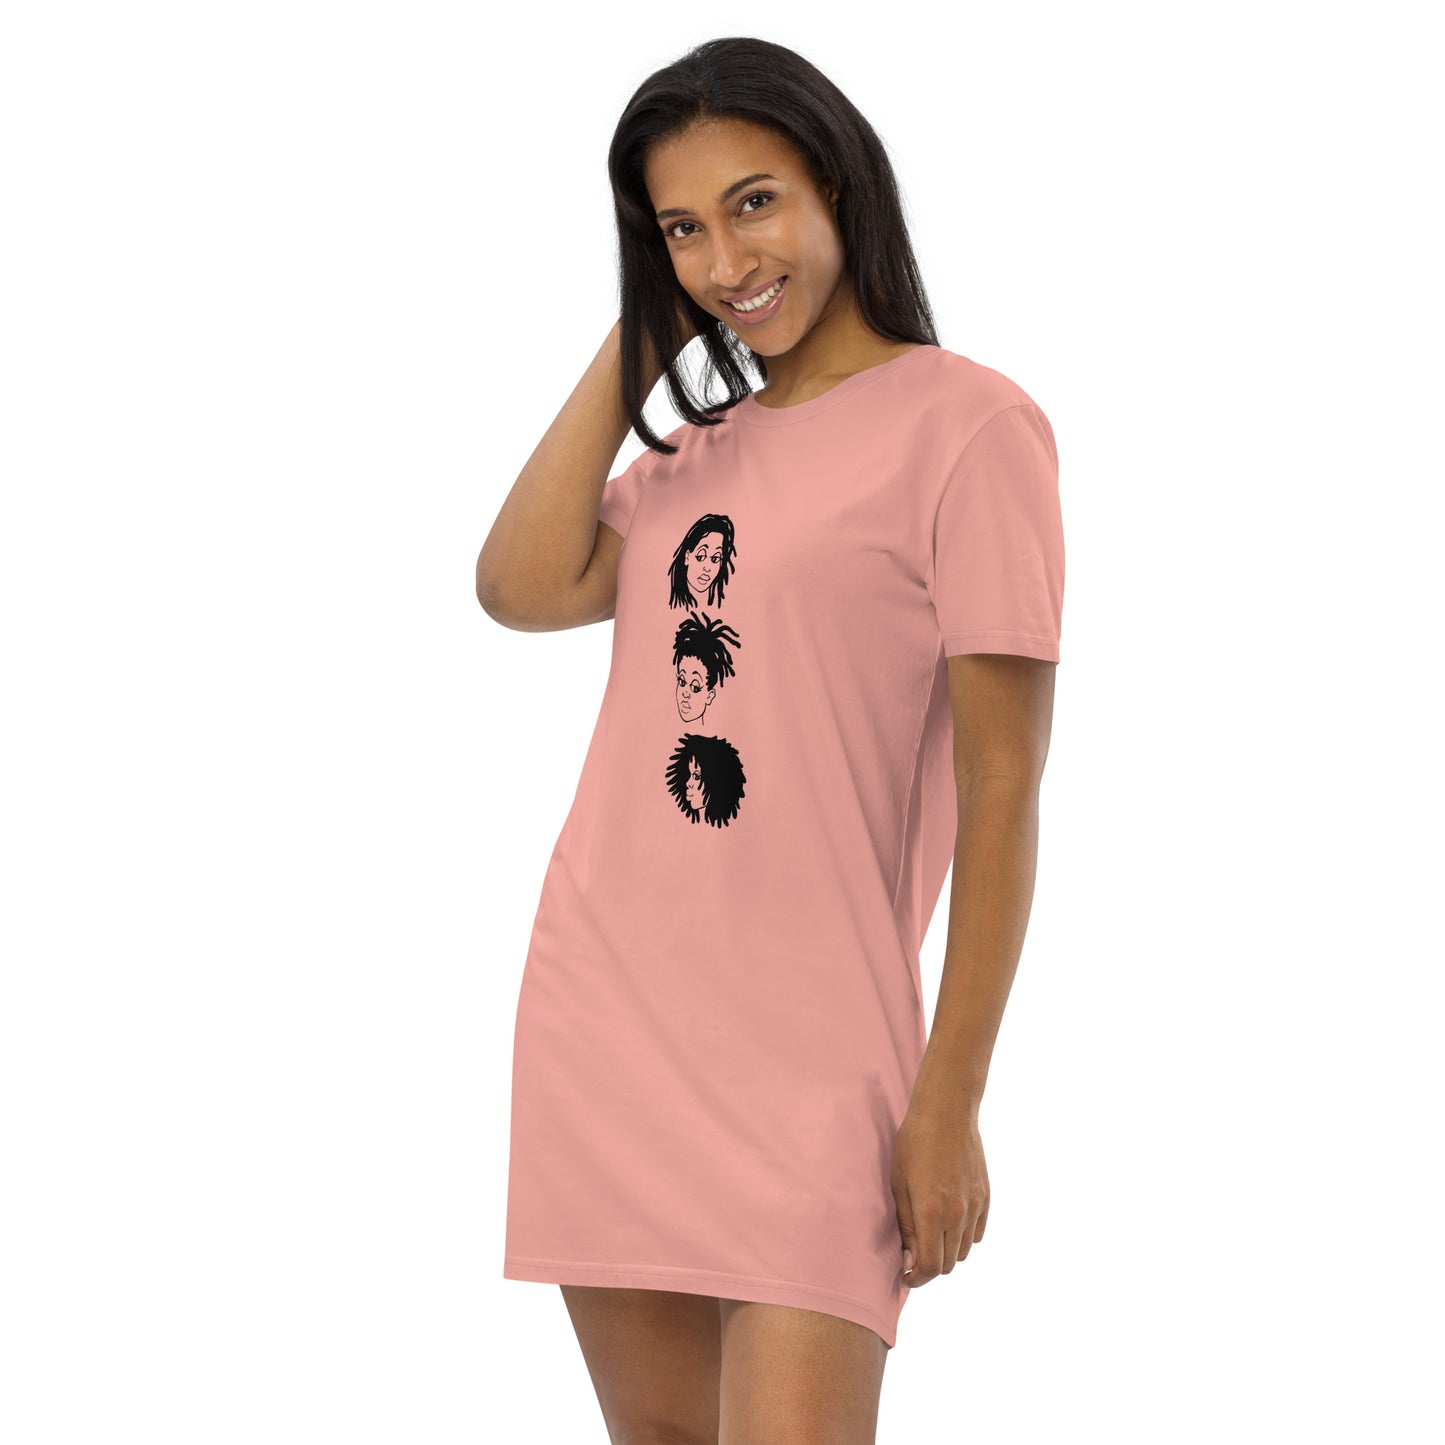 "III ROSE CHIC" T-SHIRT DRESS